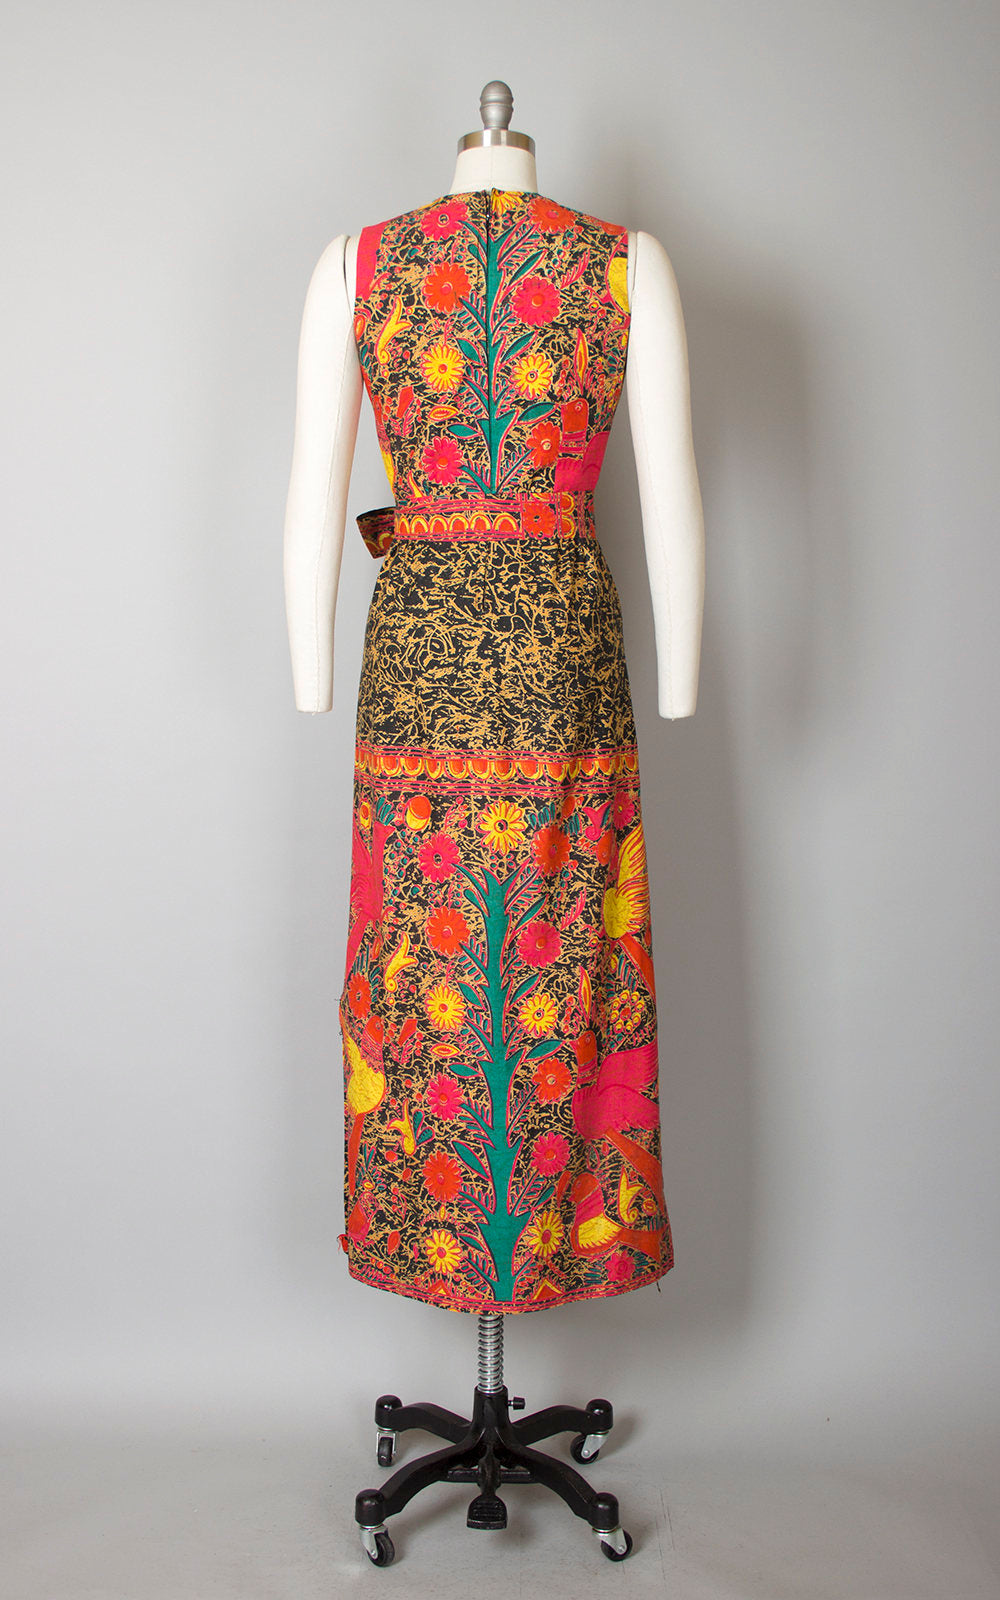 Vintage 1960s 1970s Dress | 60s 70s Mexican Sun Dress Floral Bird Novelty Batik Wax Print Cotton Maxi Day Dress (small)